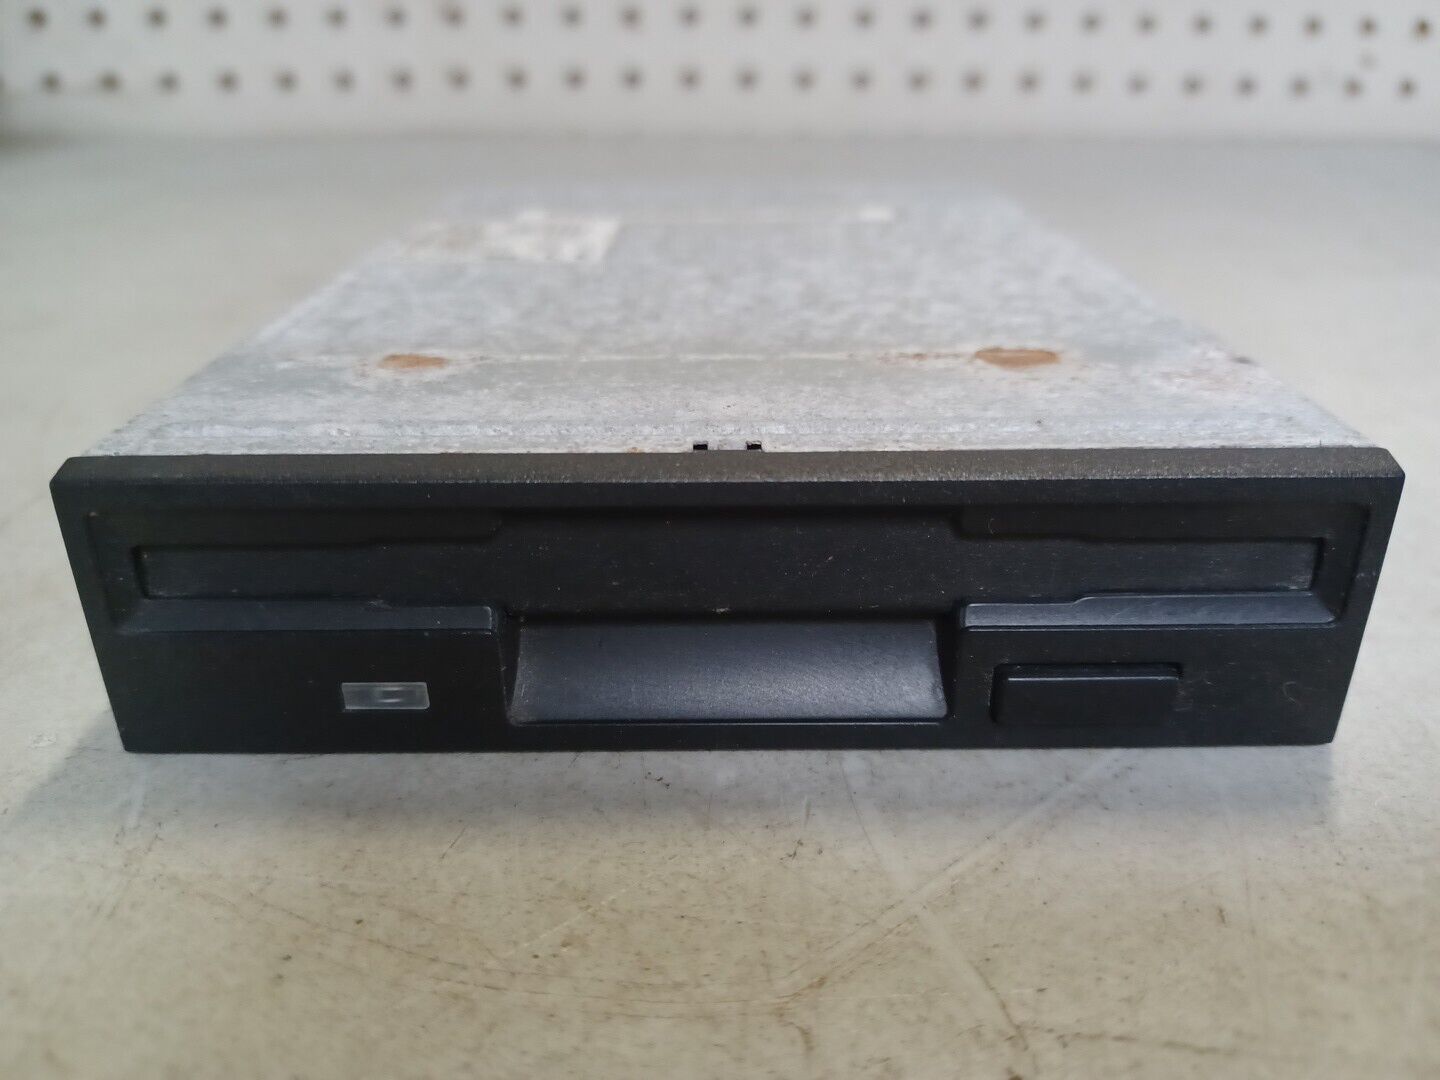 Sony Internal Floppy Disk Drive 3.5 MPF920 Black Bezel - TESTED